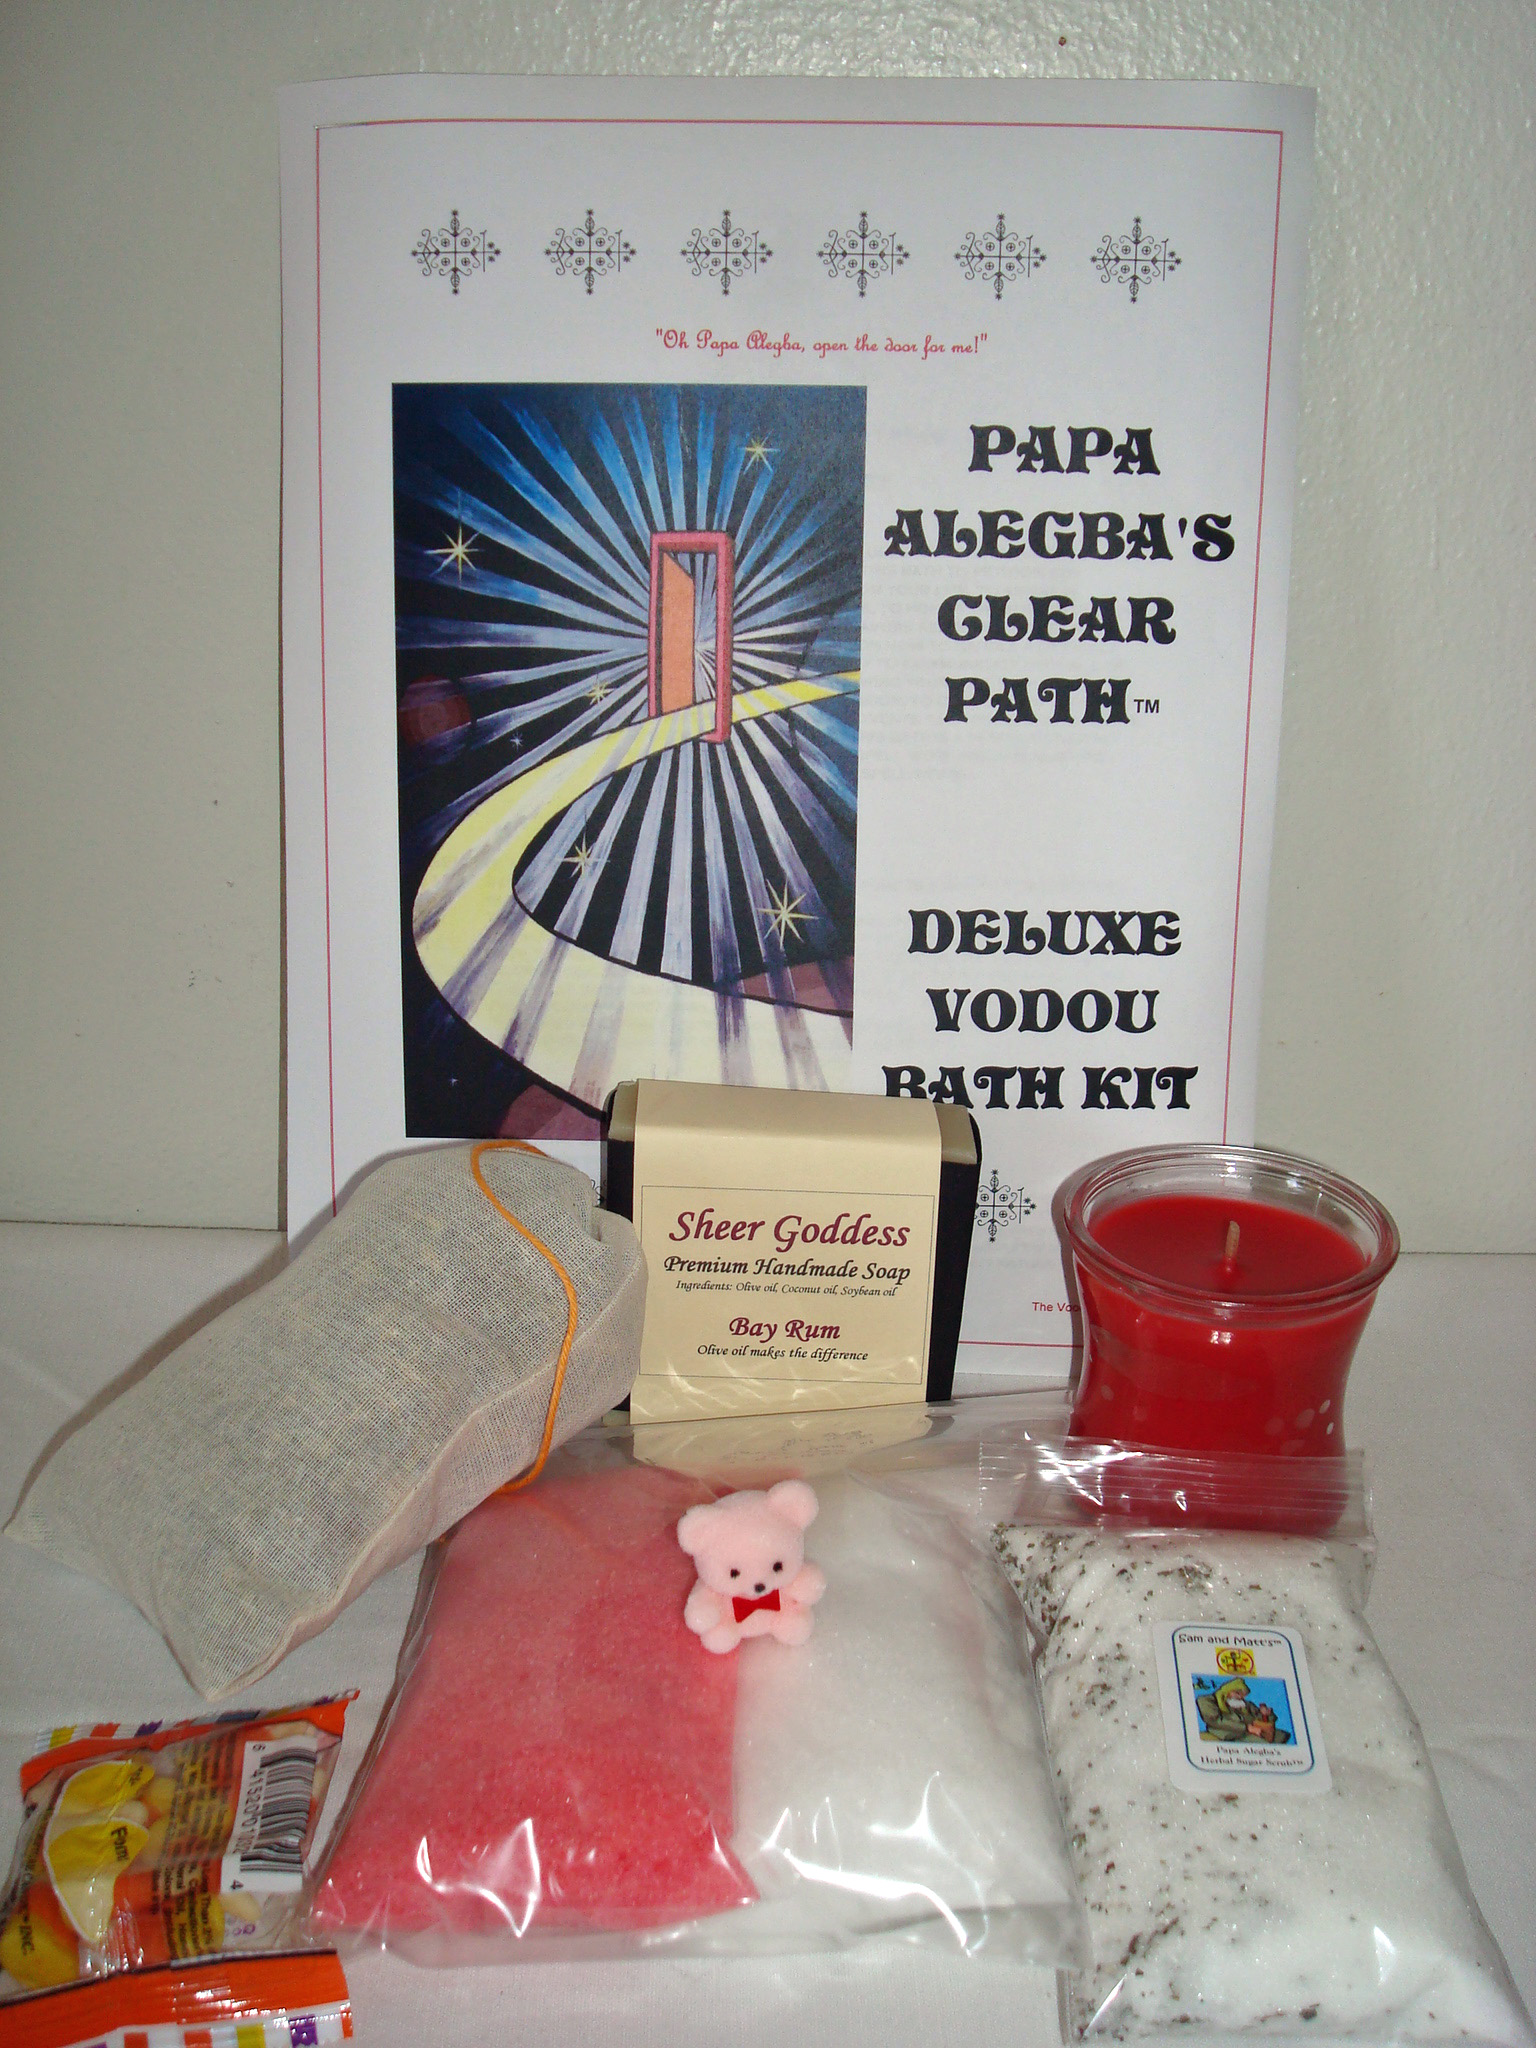 Voodoo Bath to Papa Legba